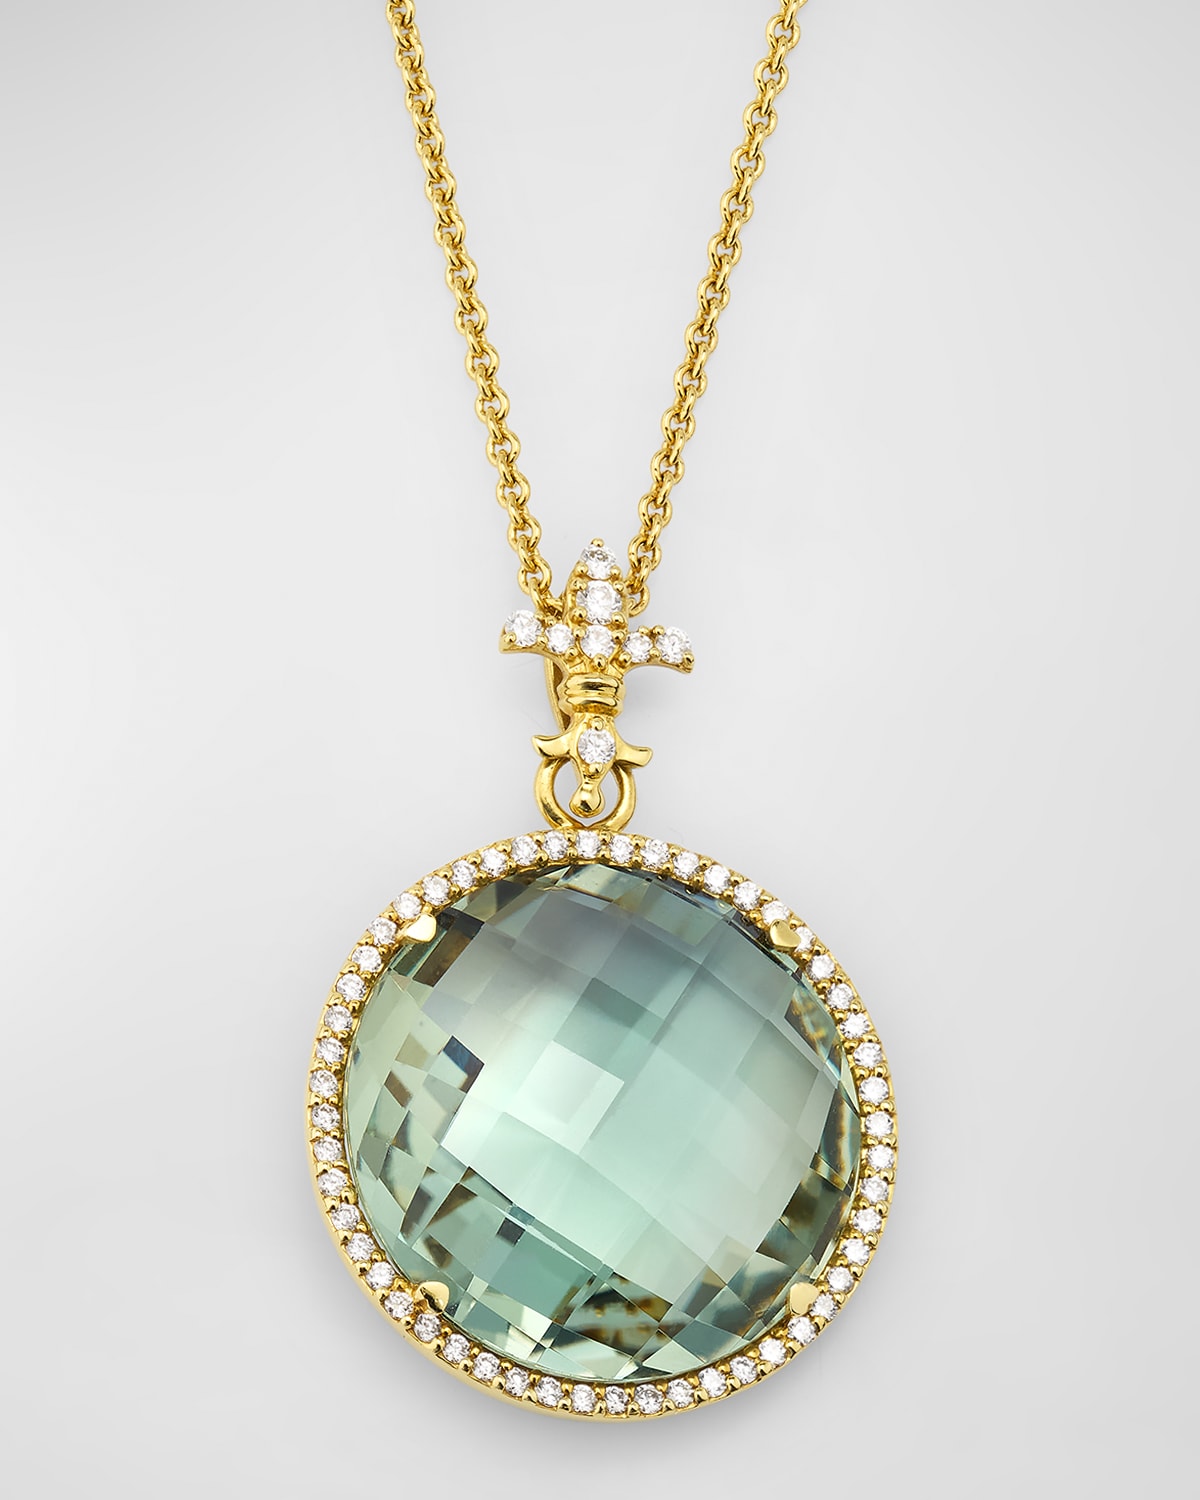 18K Yellow Gold Green Quartz Round Necklace with Fleur de Lis Bail and Diamonds